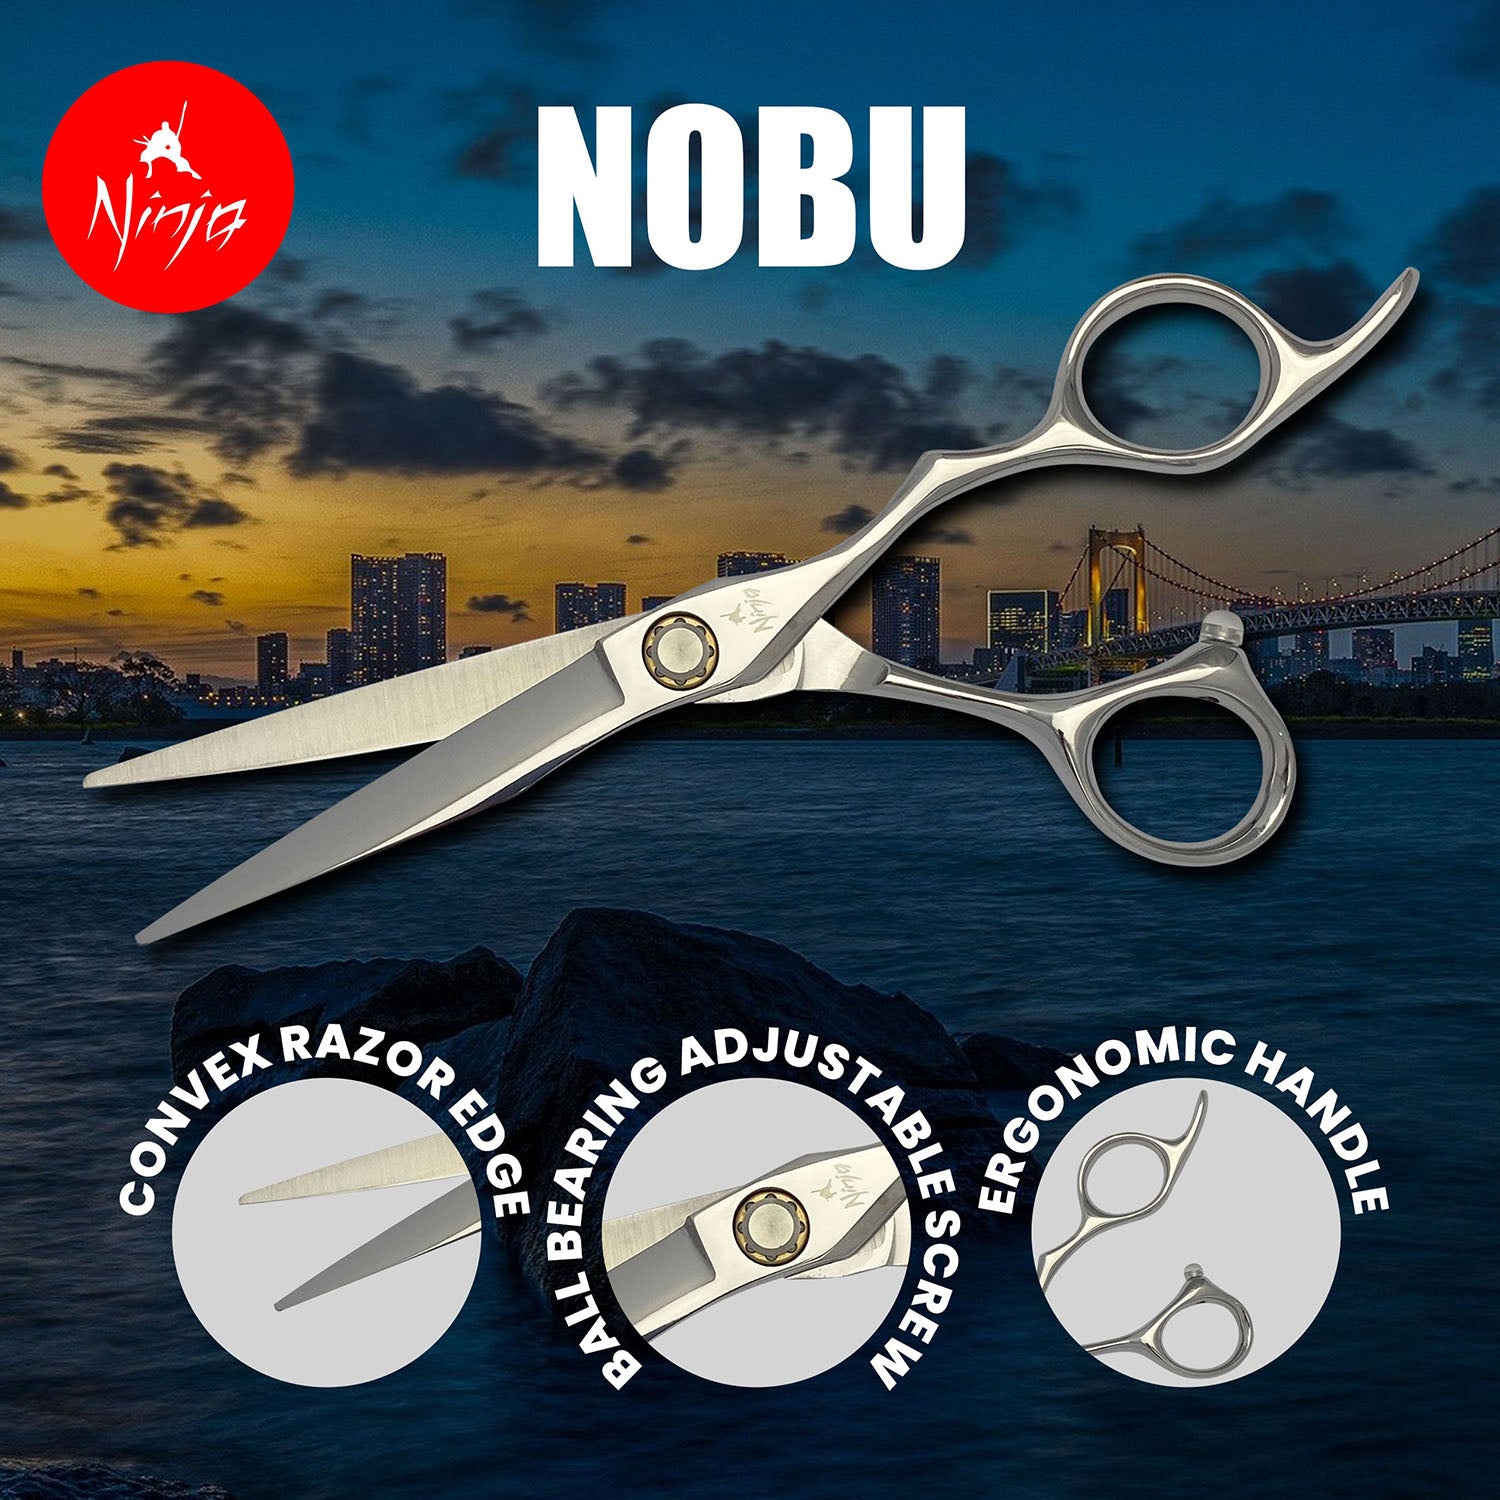 NOBU – Ninja Scissors